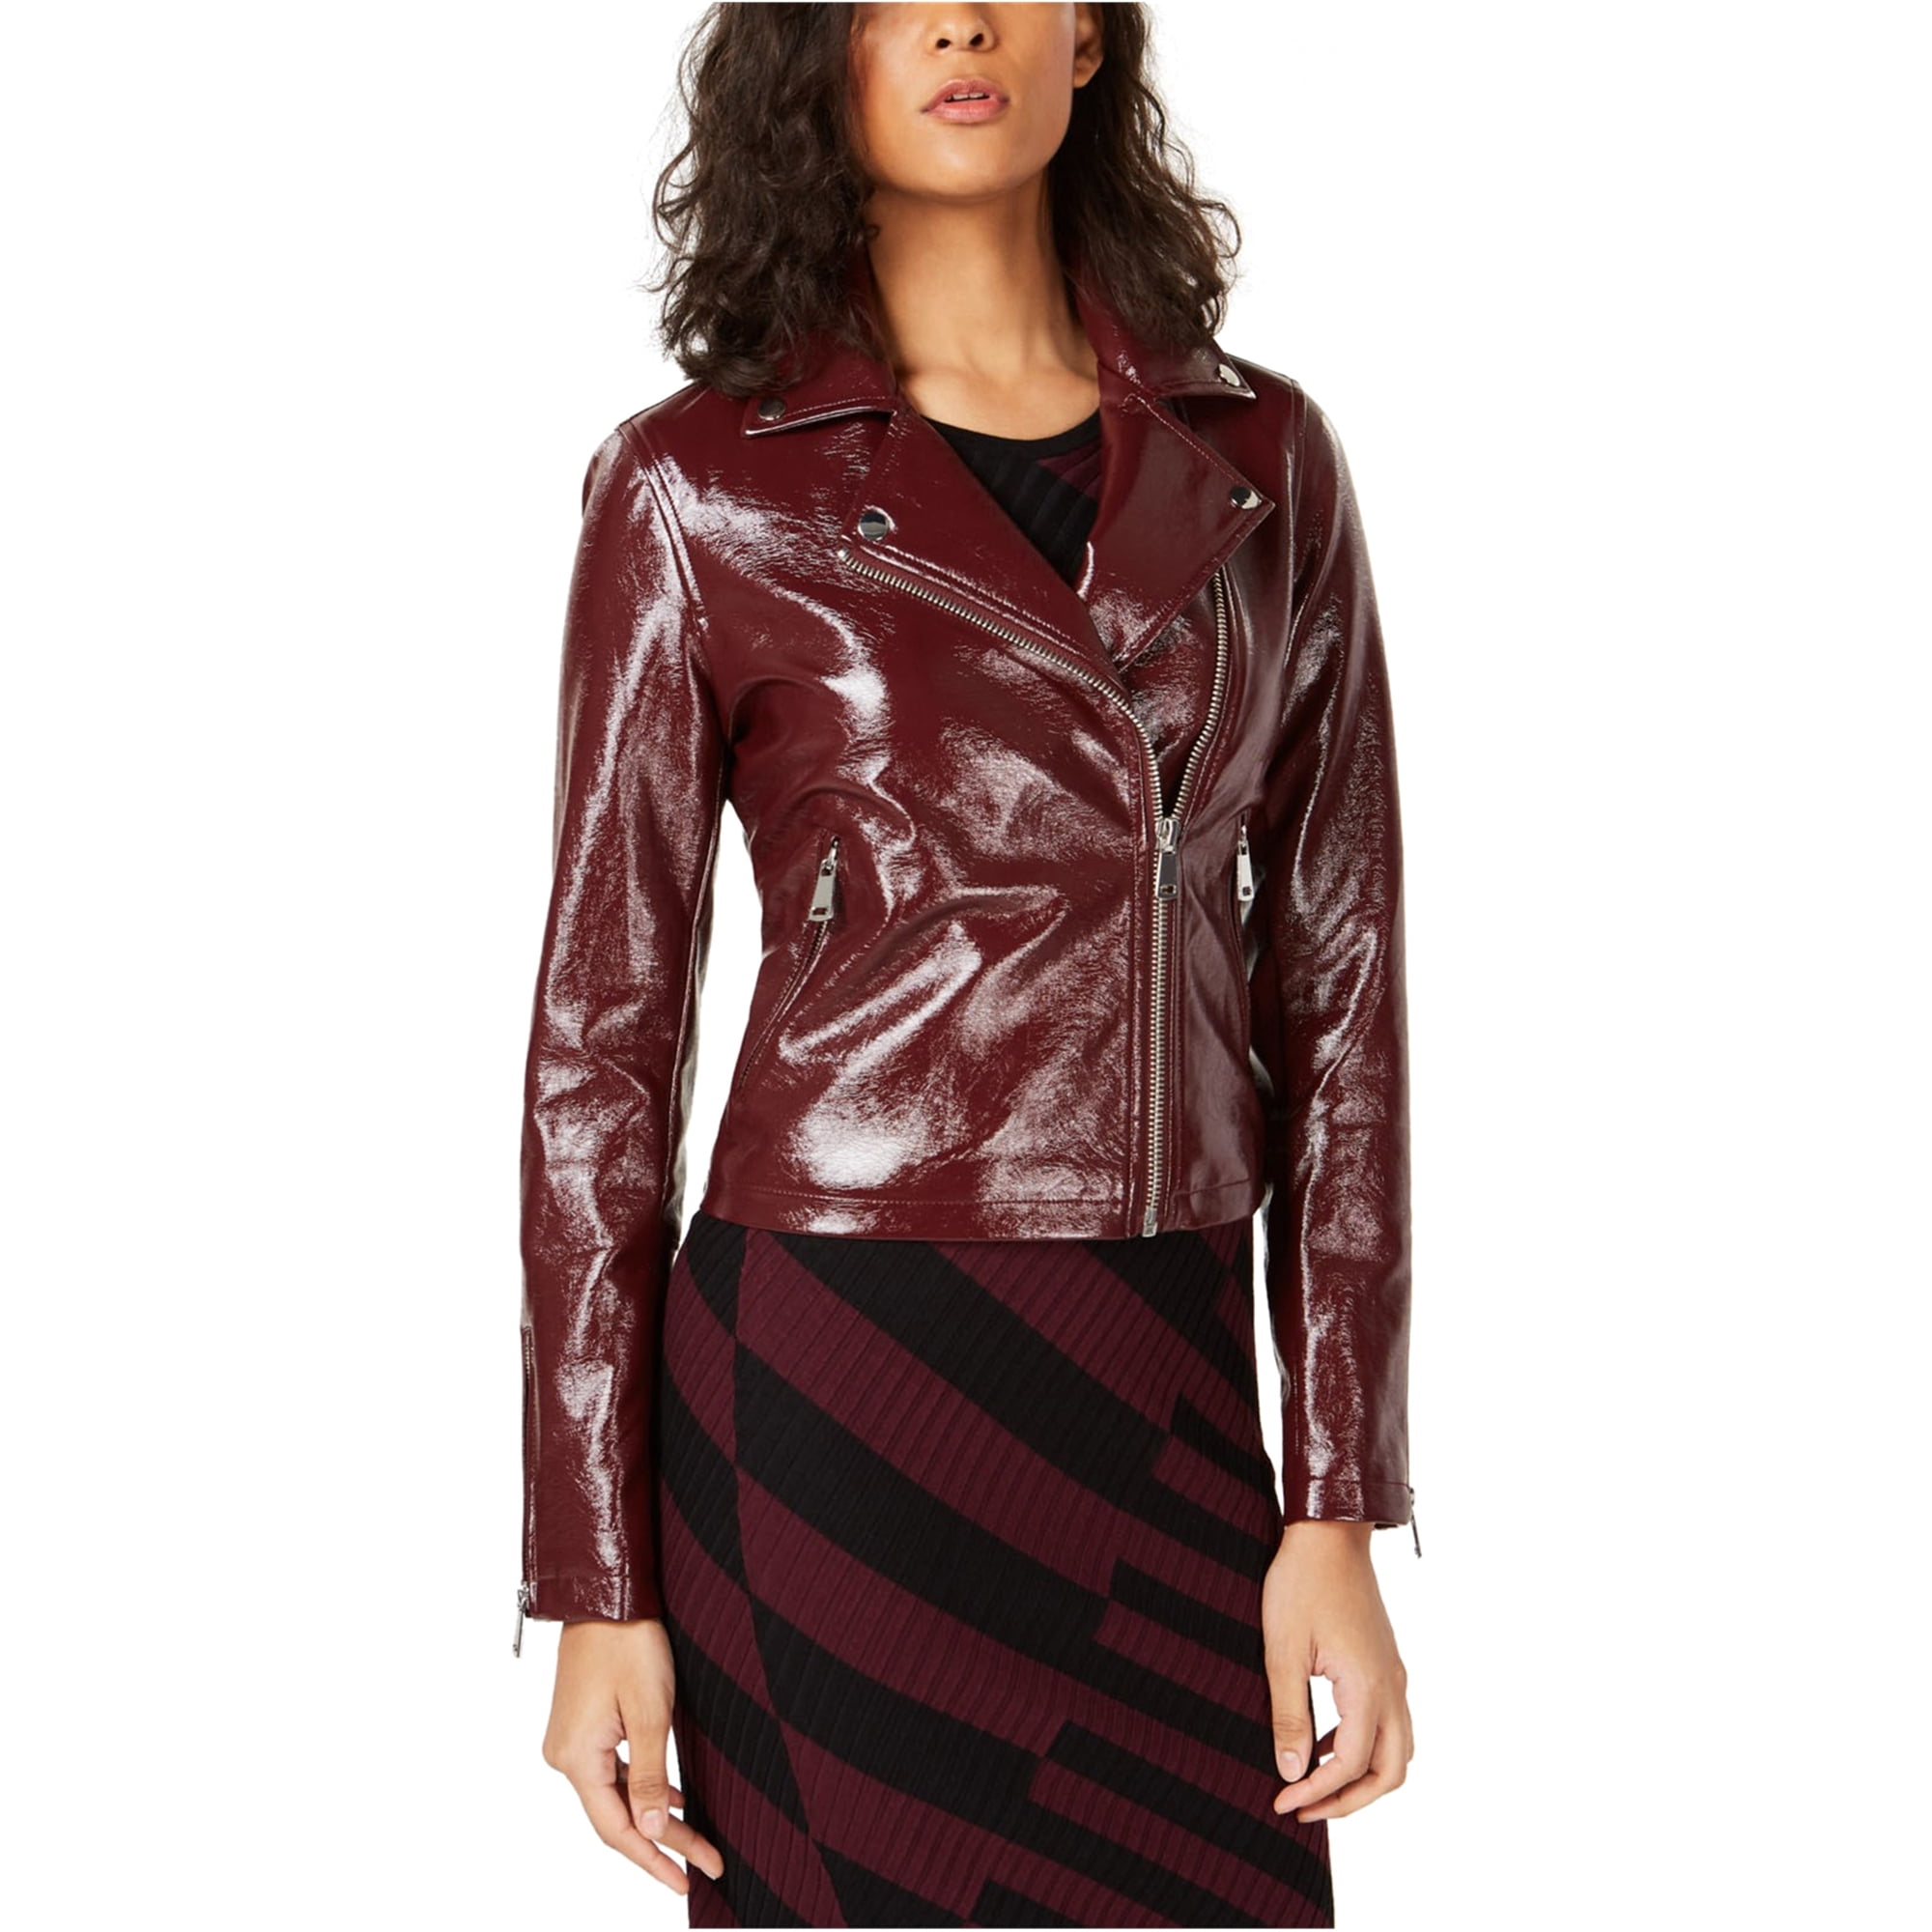 bar III Womens Zip-Front Faux-Leather Jacket, Red, Medium - Walmart.com